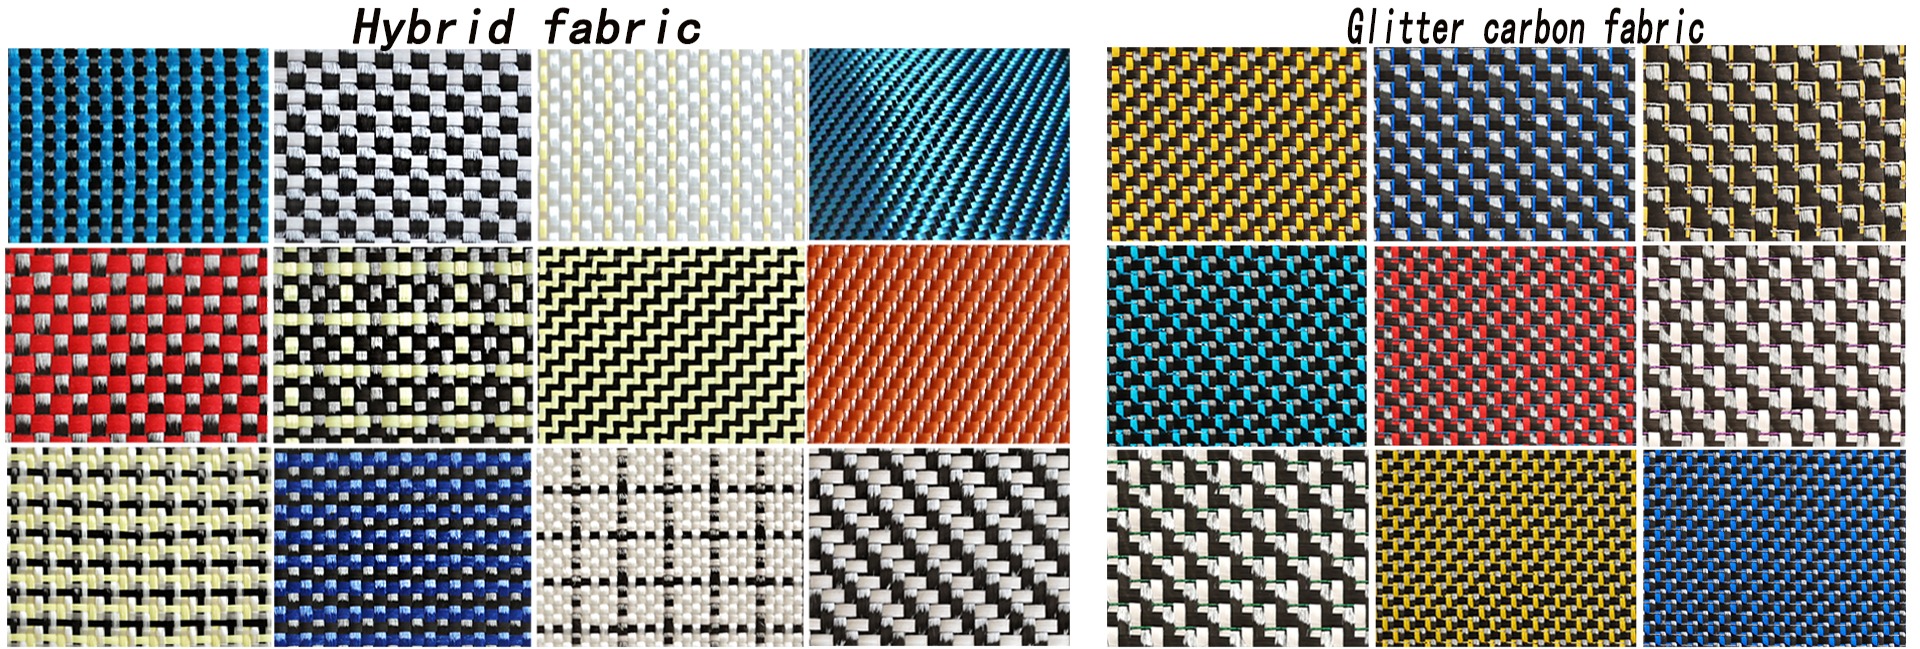 200D-3000D Yellow Plain Weave Aramid Fiber Cloth 100% Kevlar Fabric, High  Temperature Resistant High Strength Fiber Reinforced - AliExpress